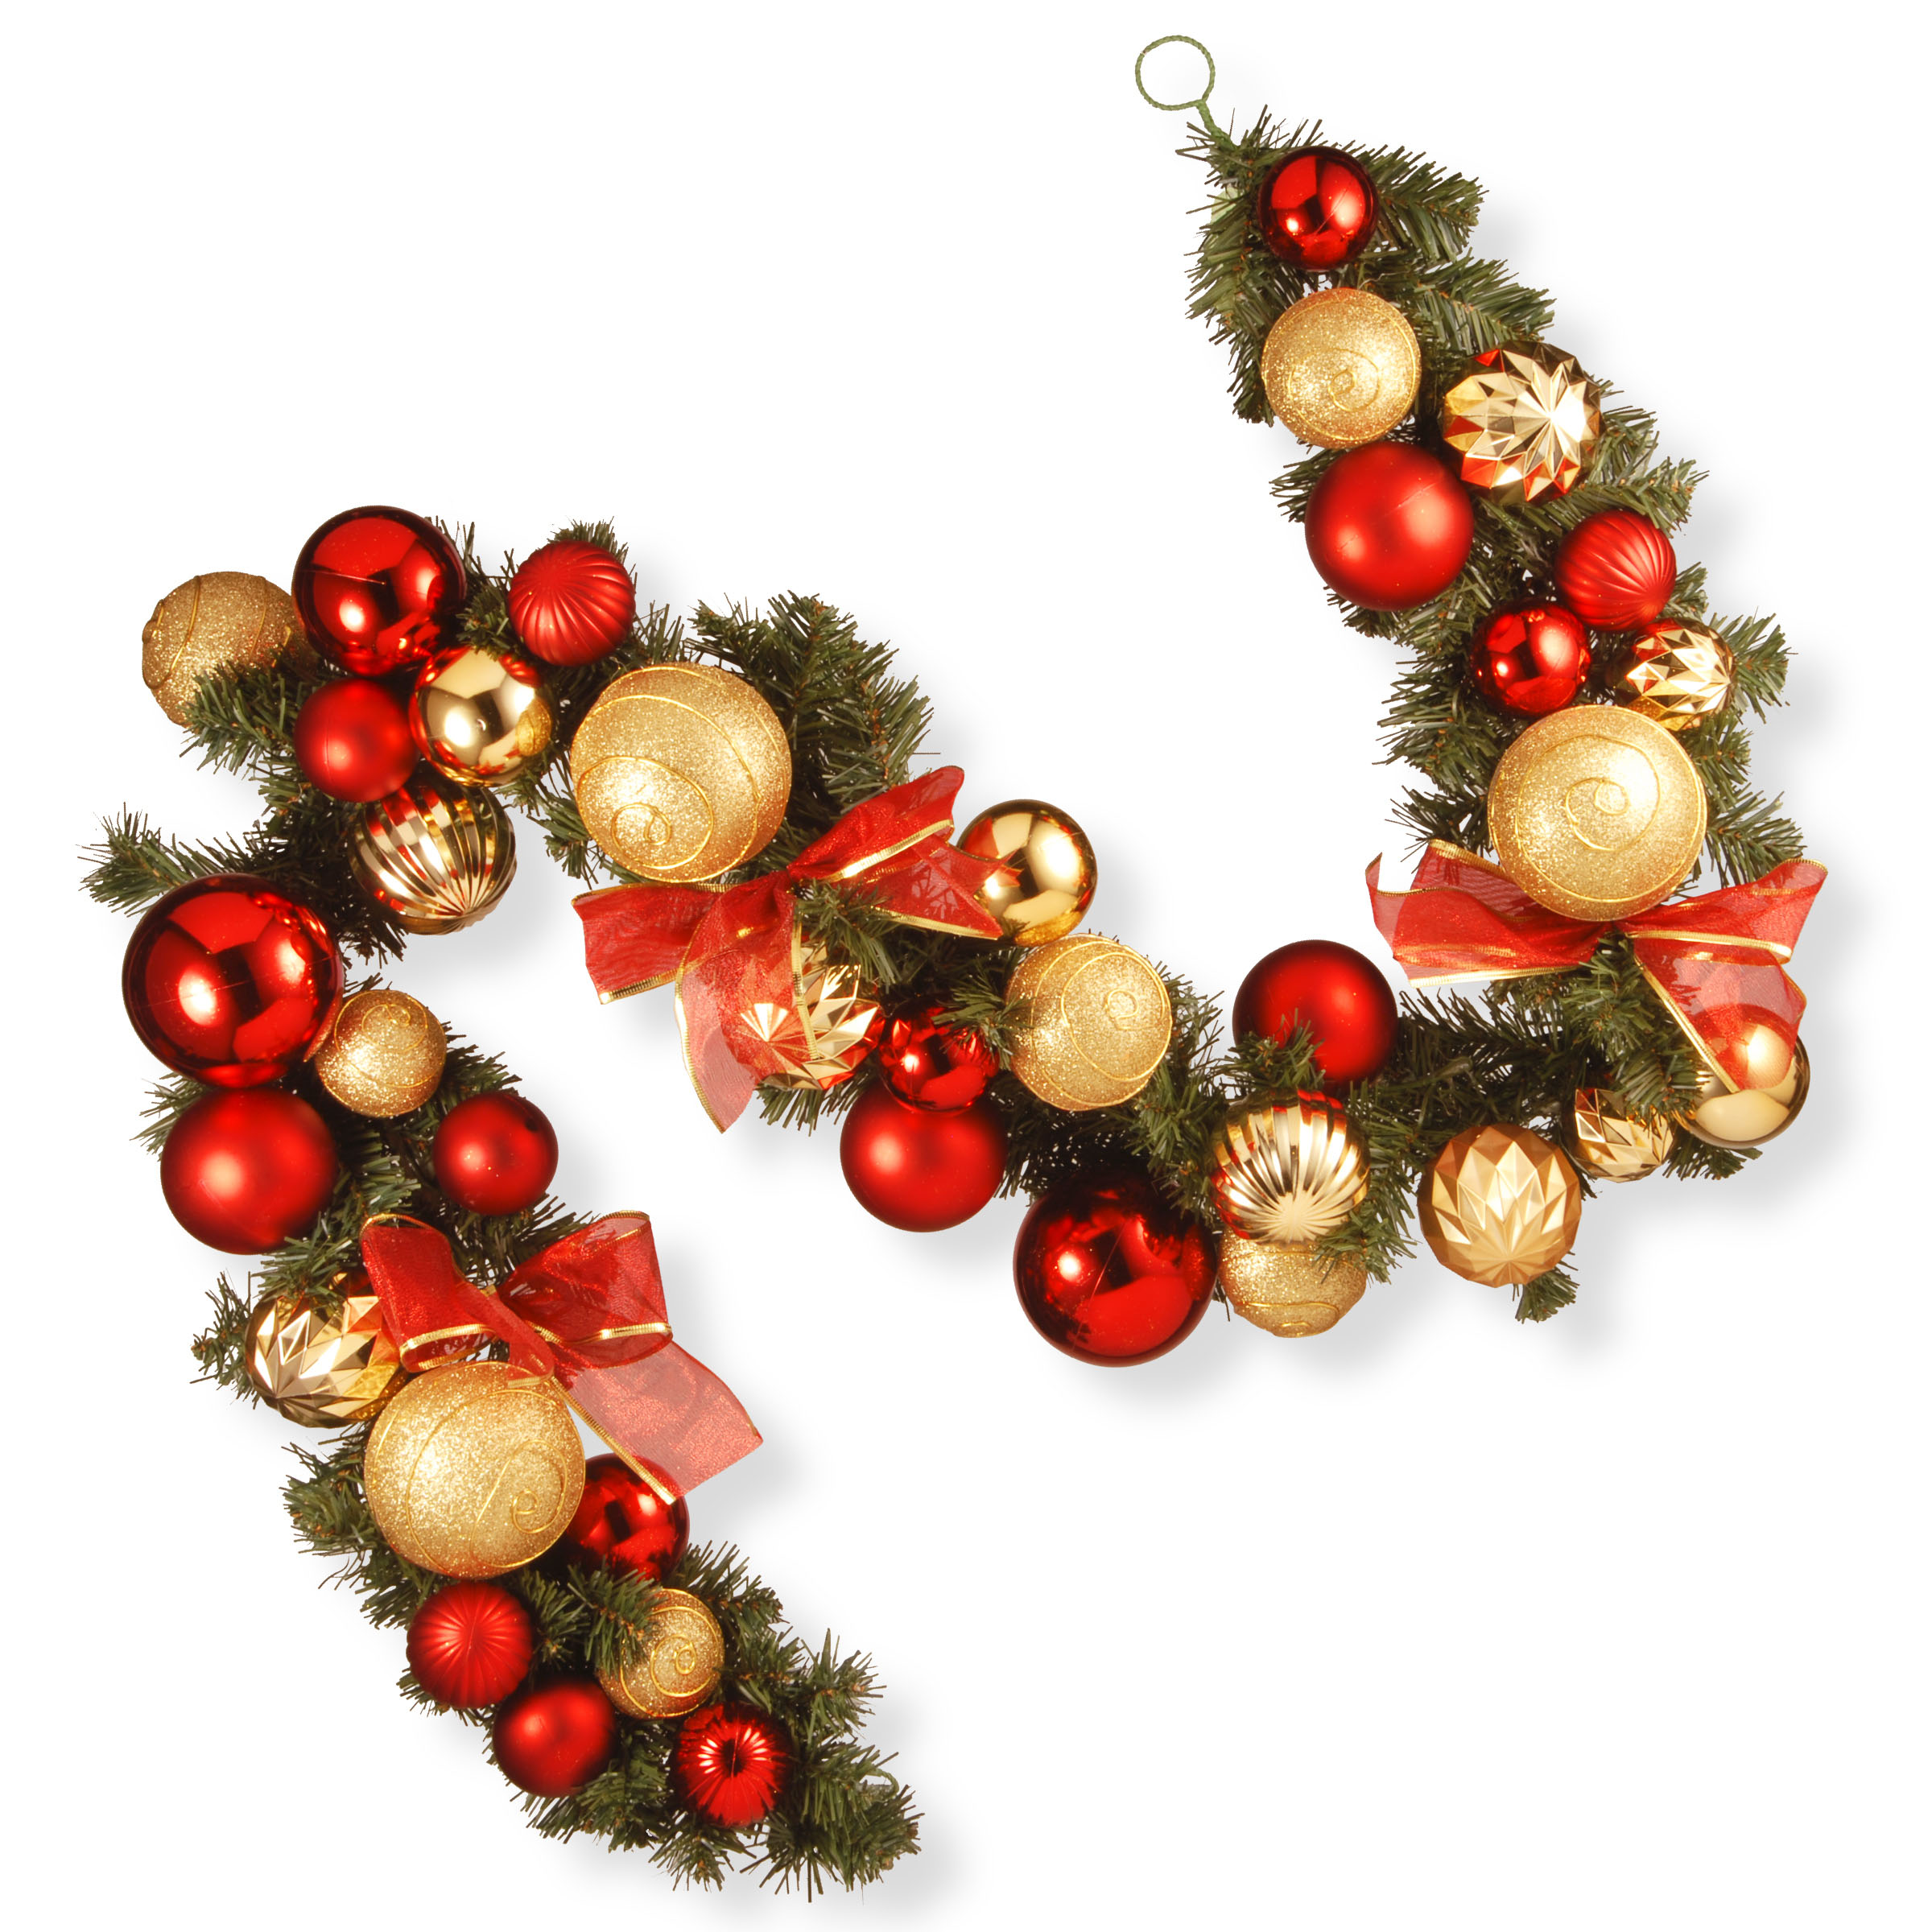 6 Foot Gold & Red Mixed Ornament Garland: Unlit